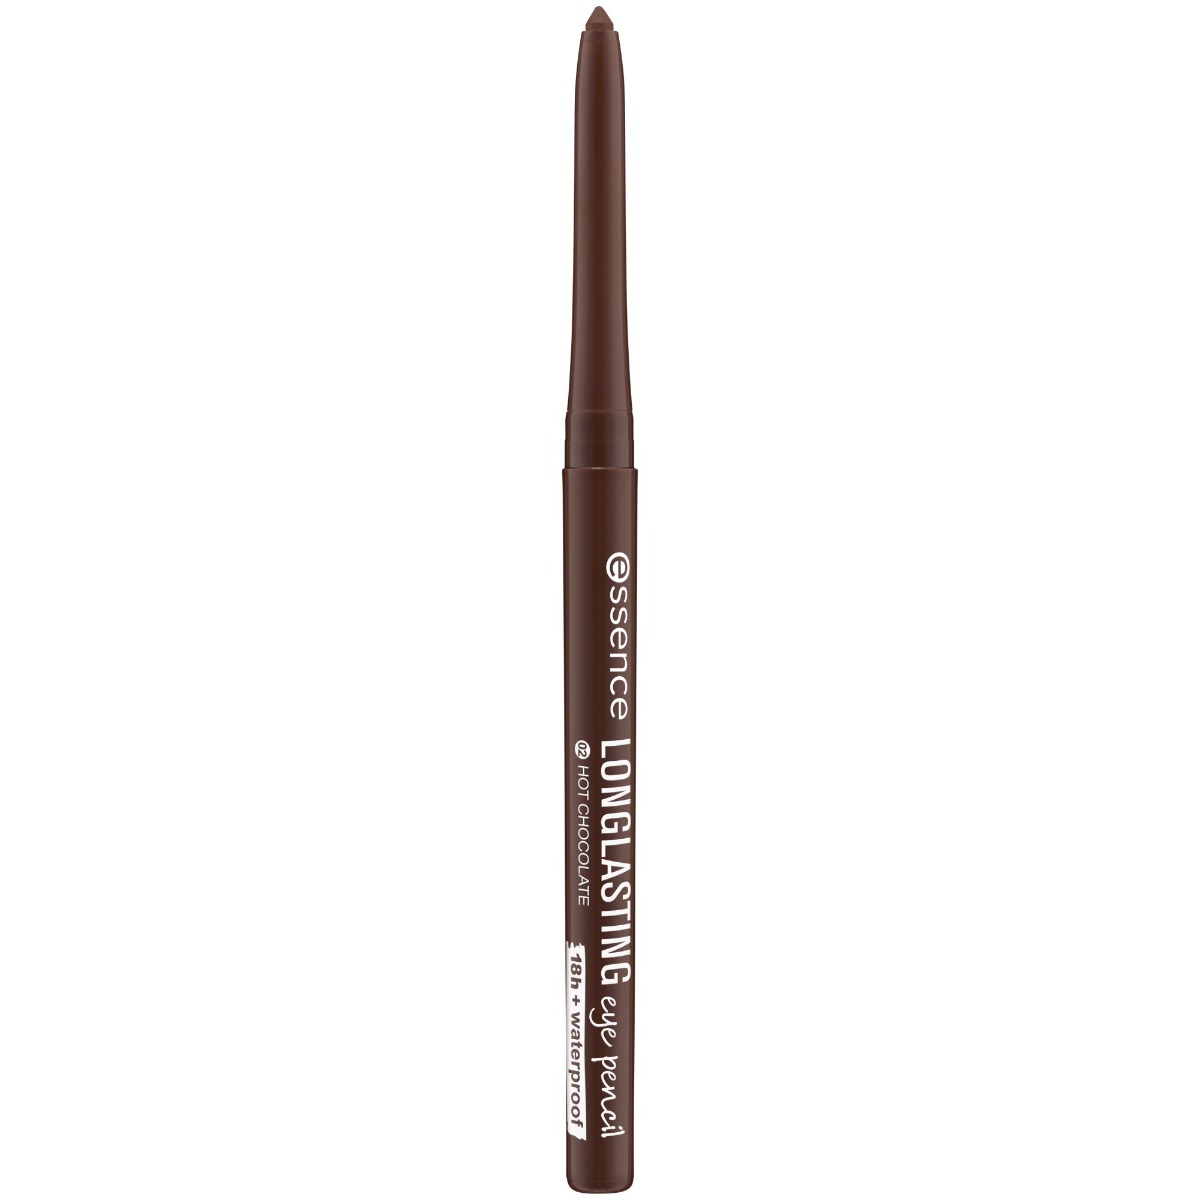 Creion pentru ochi Long-Lasting 02 - Hot Chocolate, 0.28g, Essence